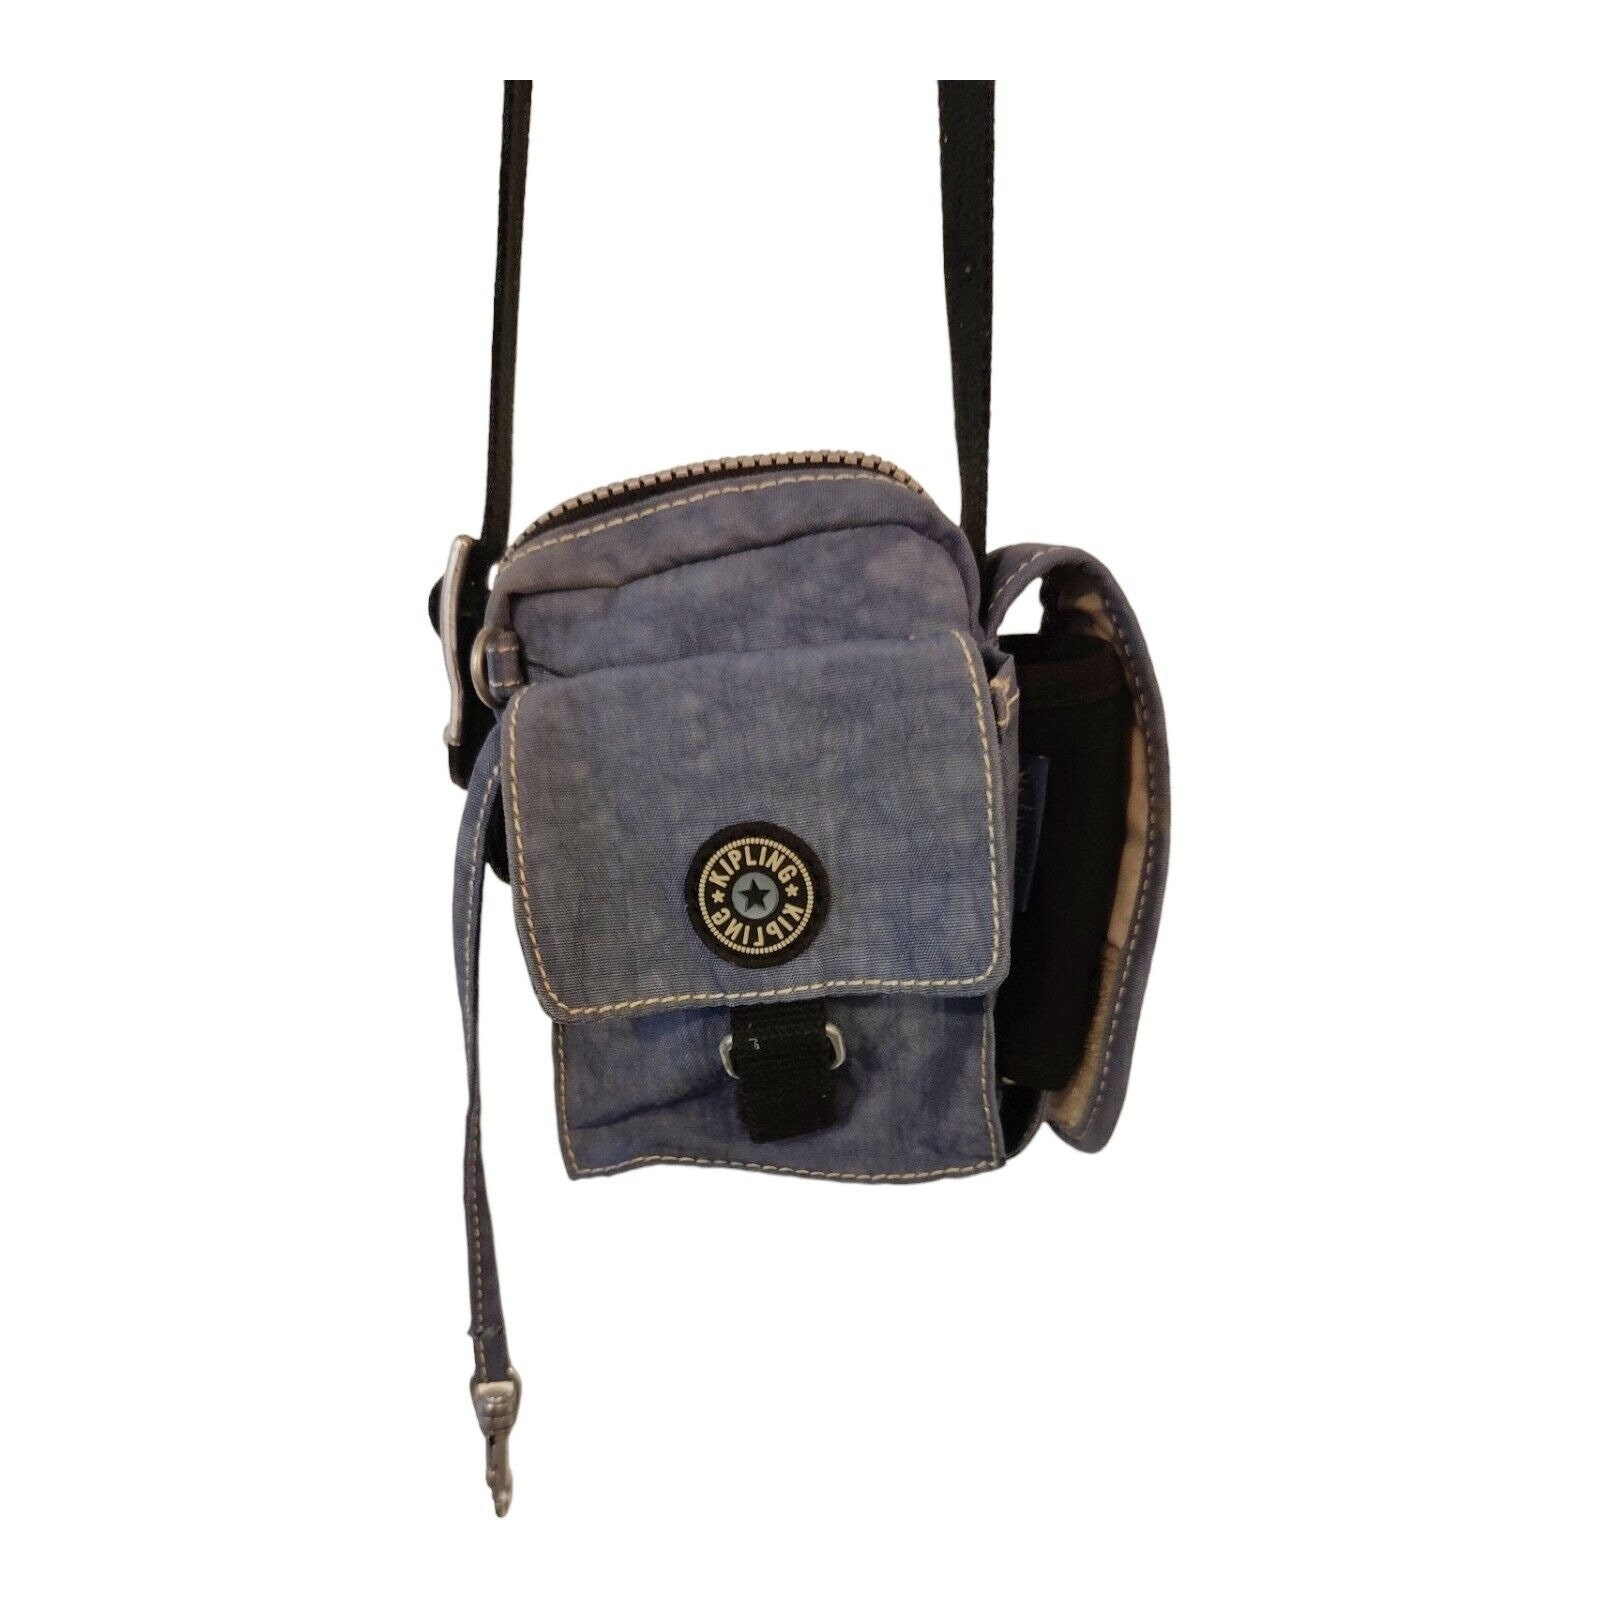 Kipling Women's Shoulder Bag (Sunflower) : Amazon.in: Fashion